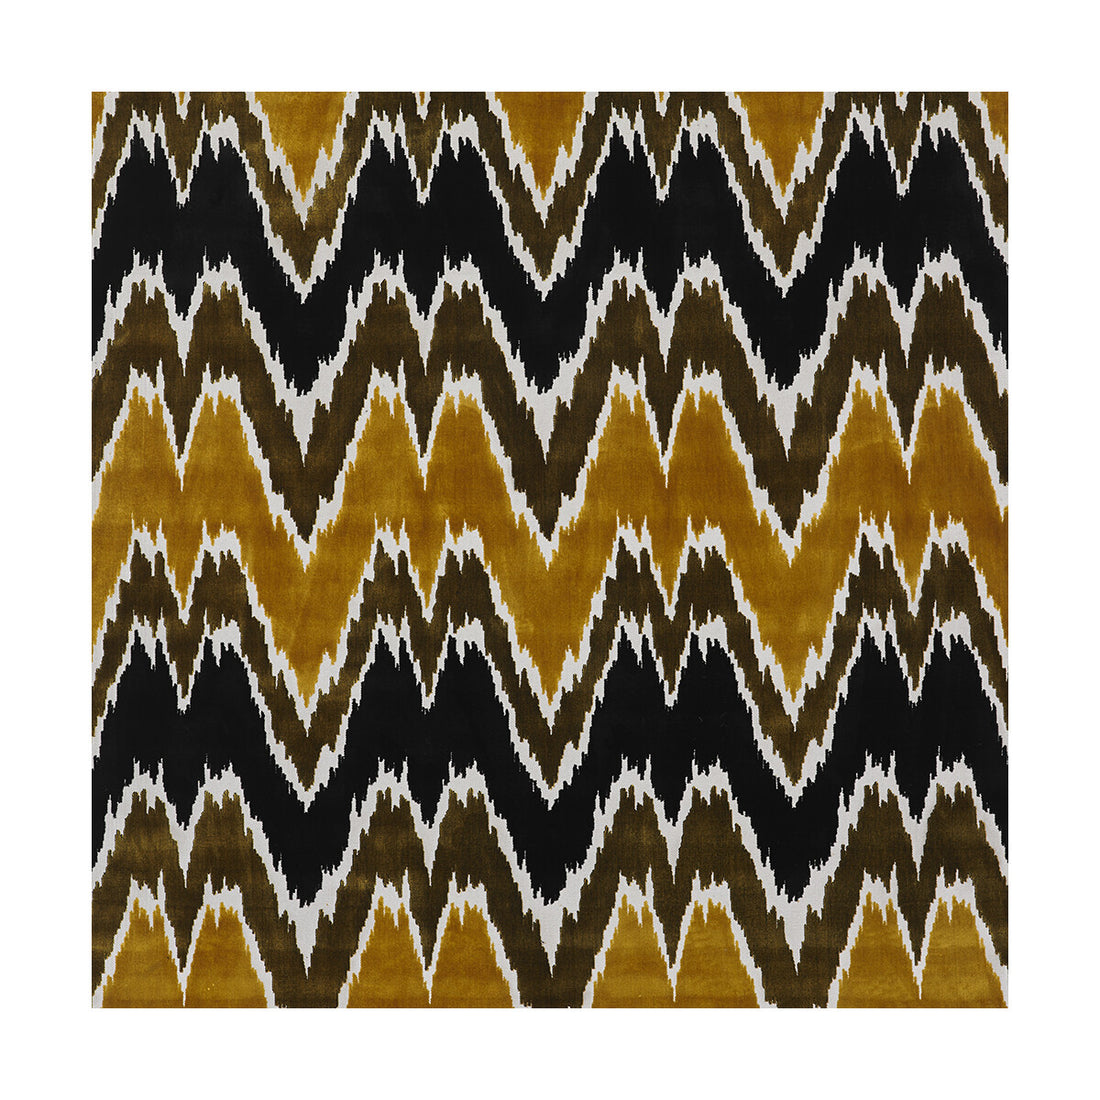 Alejandro fabric in oro/onyx color - pattern LCT5359.006.0 - by Gaston y Daniela in the Lorenzo Castillo III collection